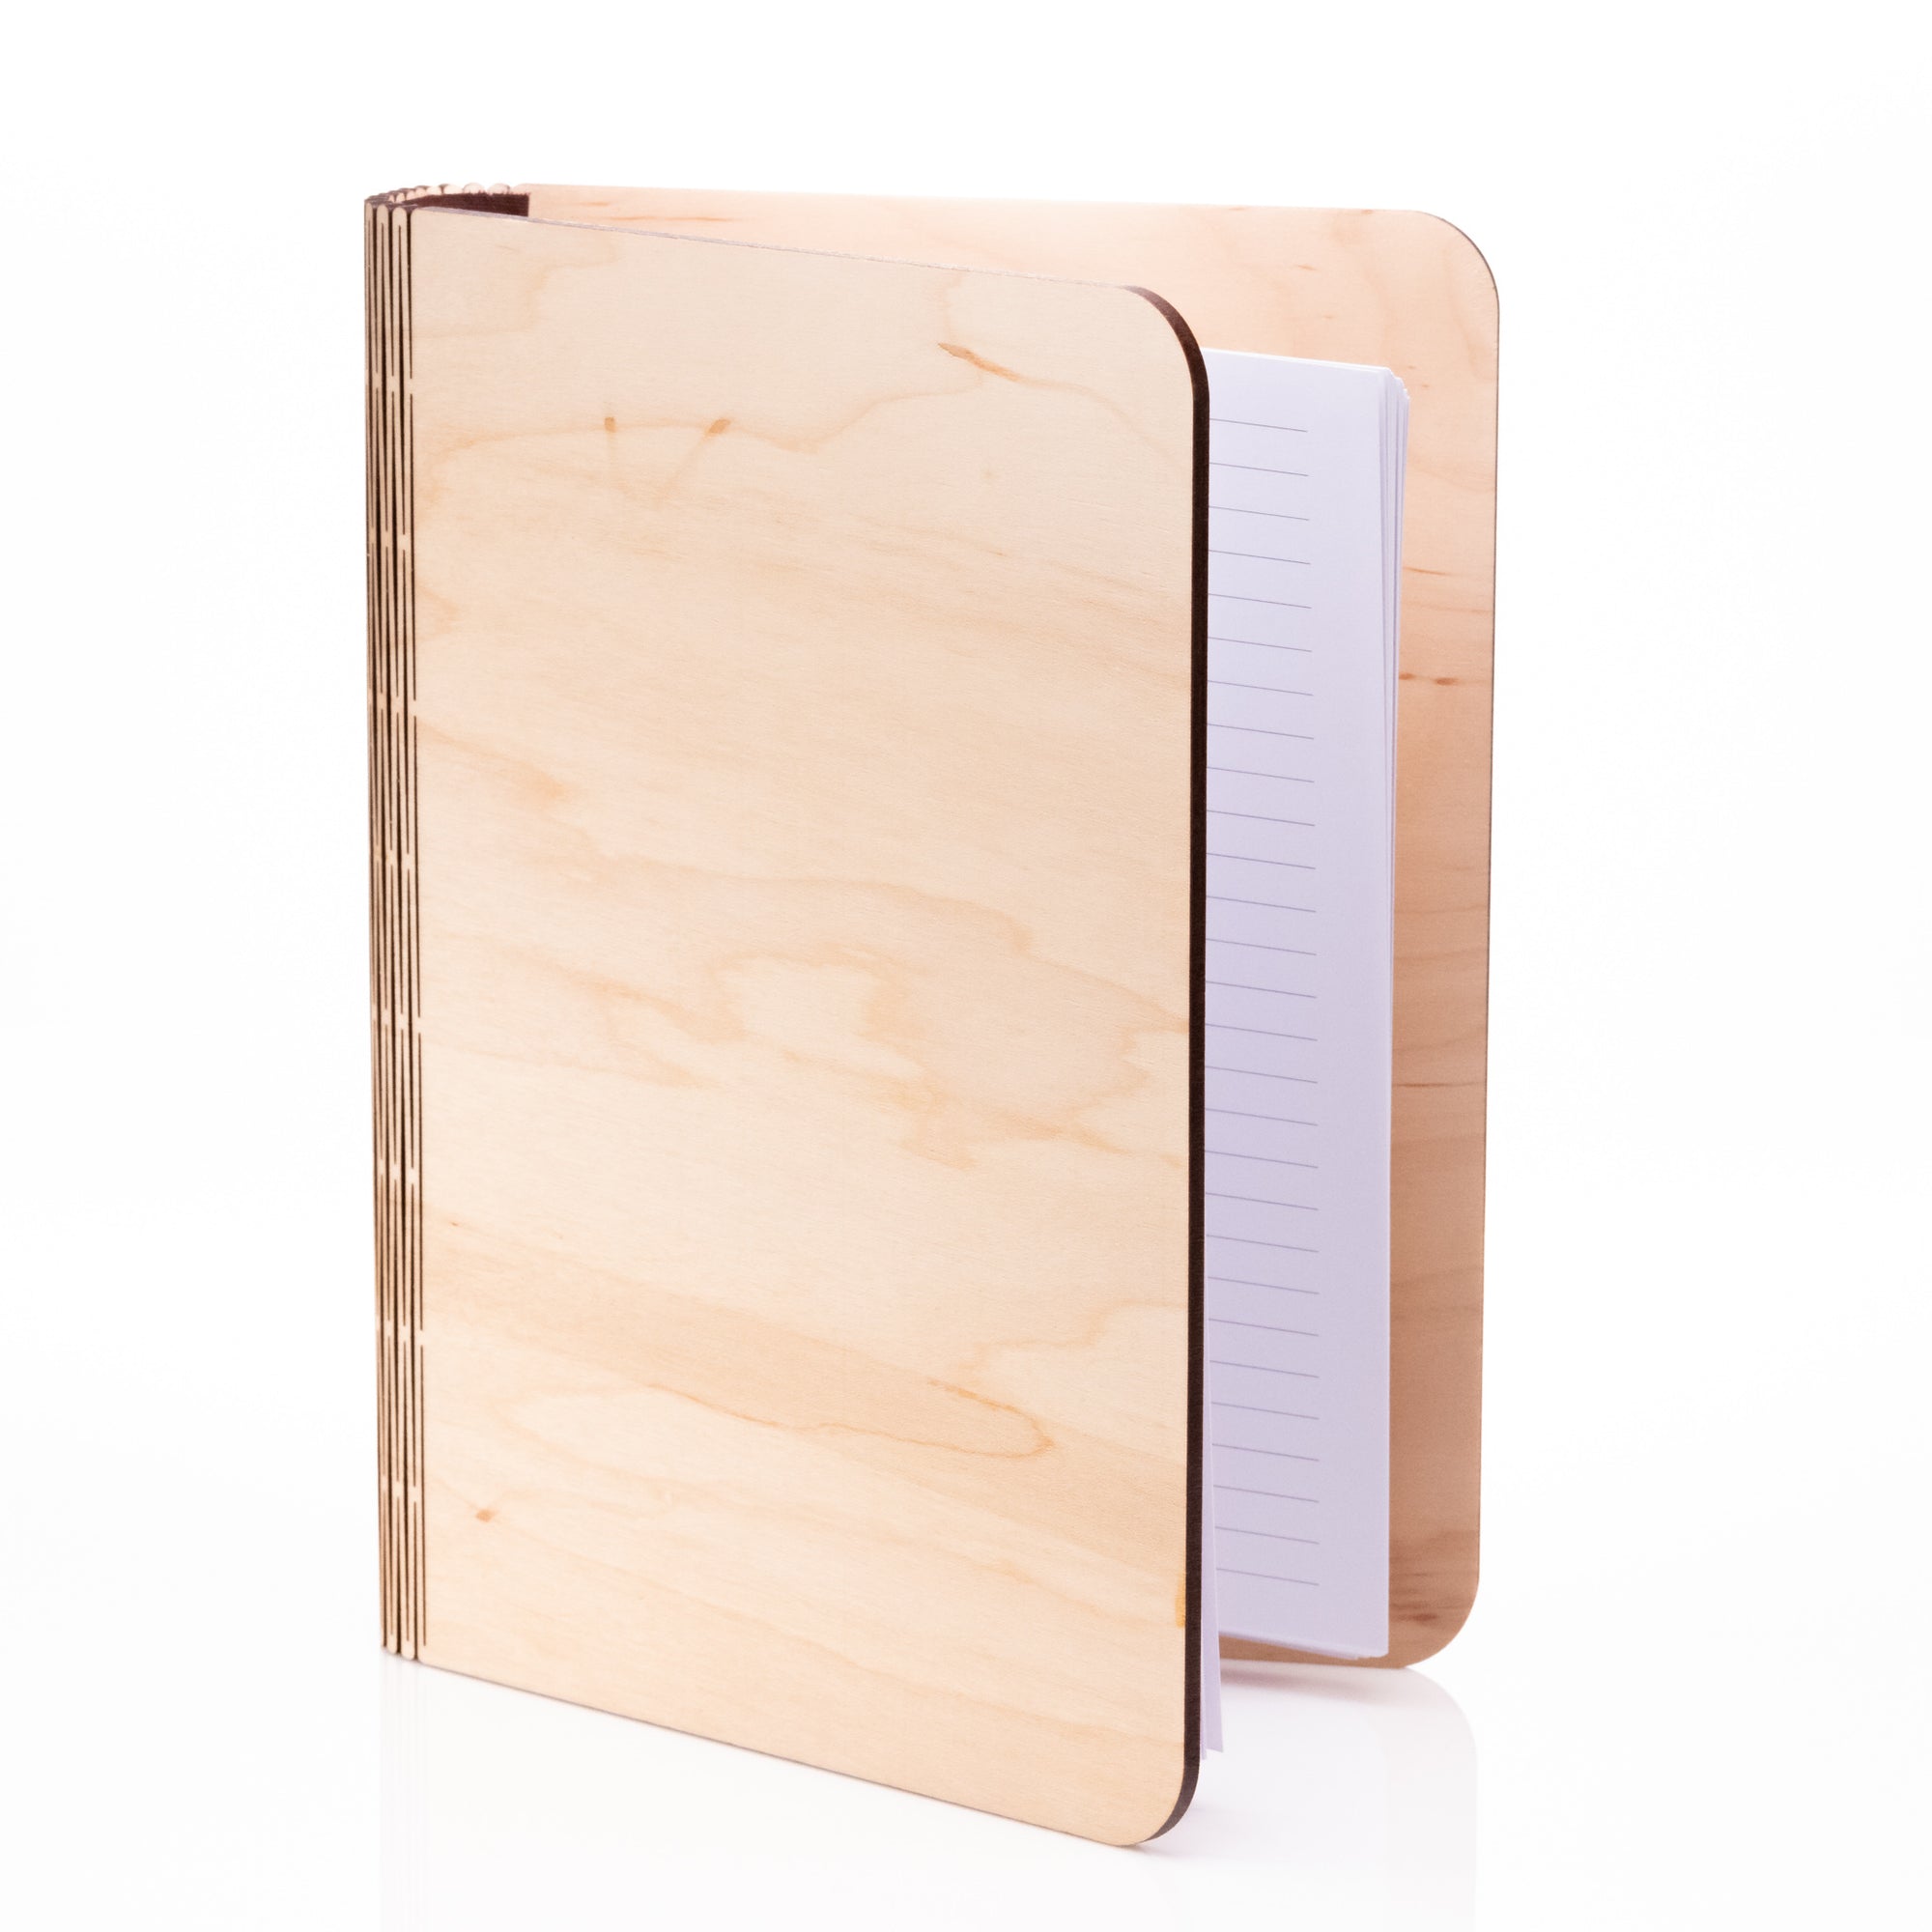 Living Hinge Hardwood Notebook